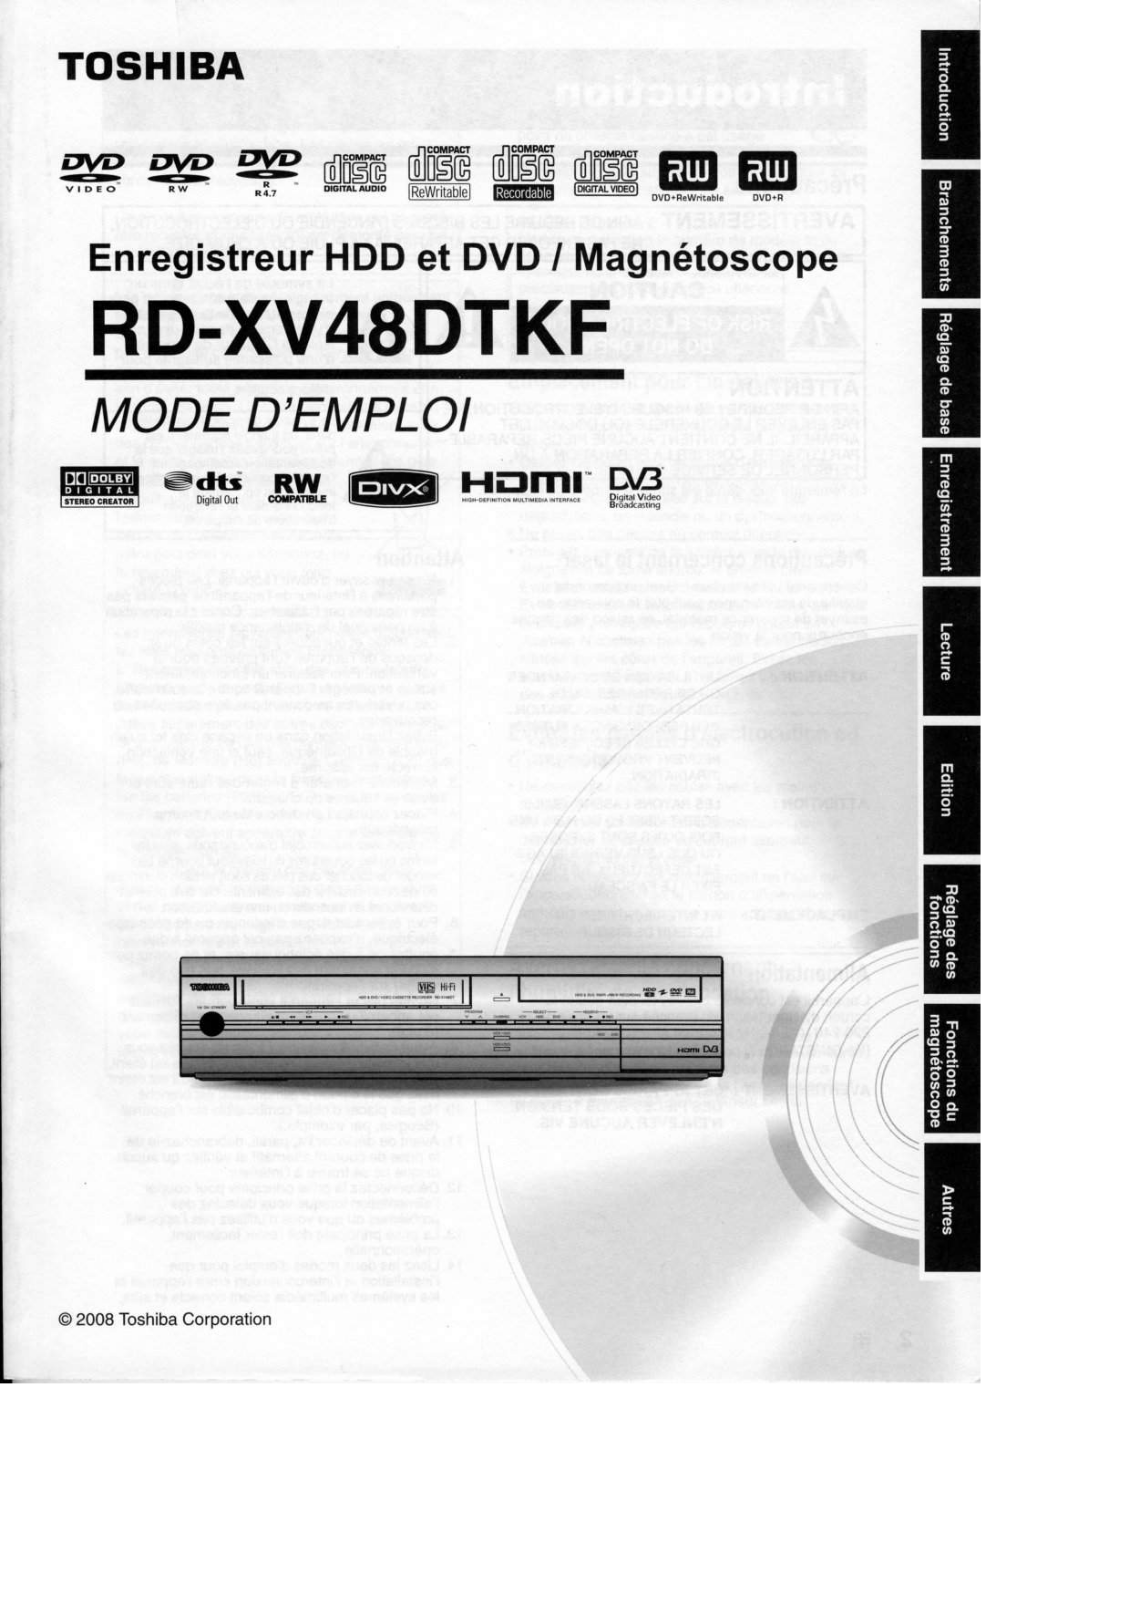 TOSHIBA RD-XV48DT User Manual